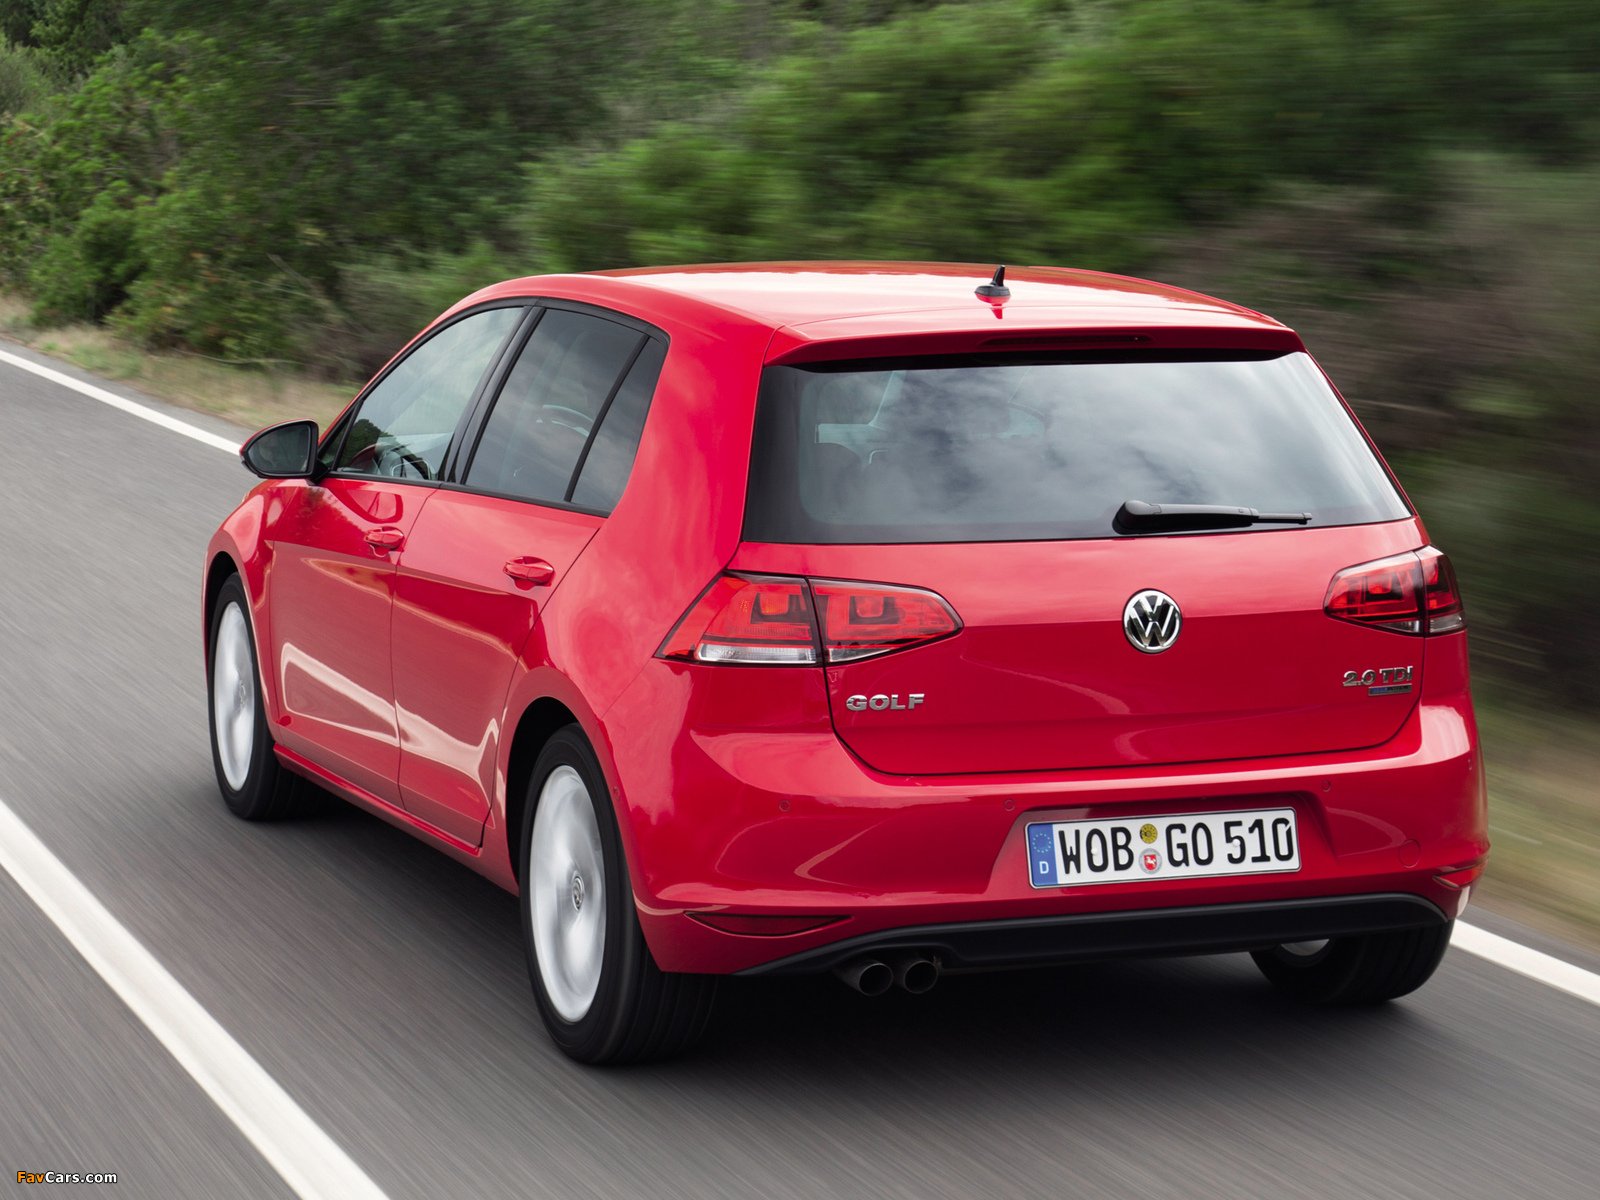 Ojetý Volkswagen Golf VII – vozům pod 200 tisíc korun se raději